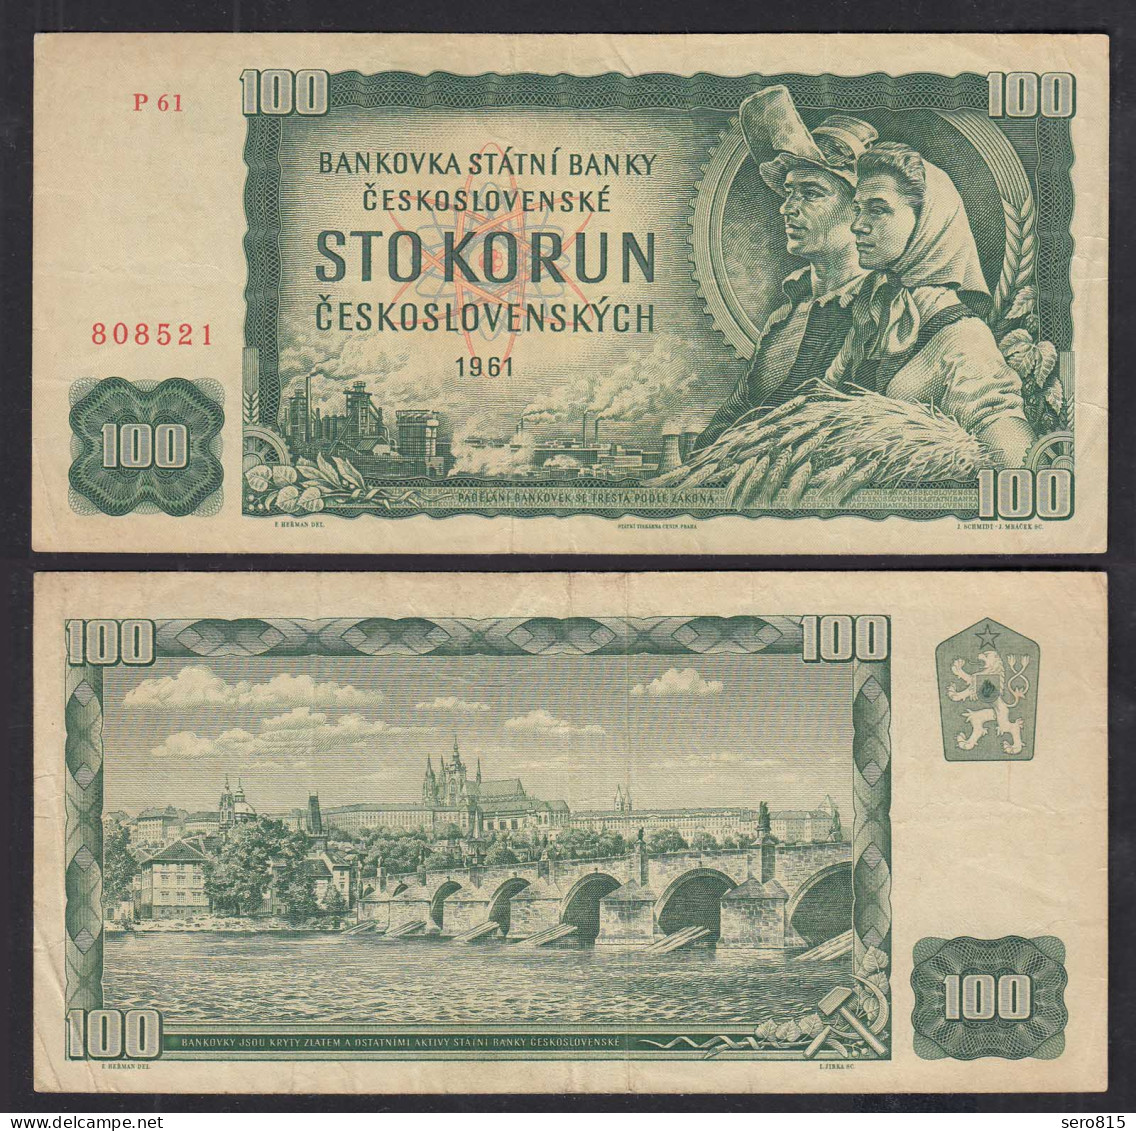 TSCHECHOSLOWAKEI - CZECHOSLOVAKIA 100 KORUN 1961 Pick 91e VF (3) P61    (30324 - Tchécoslovaquie